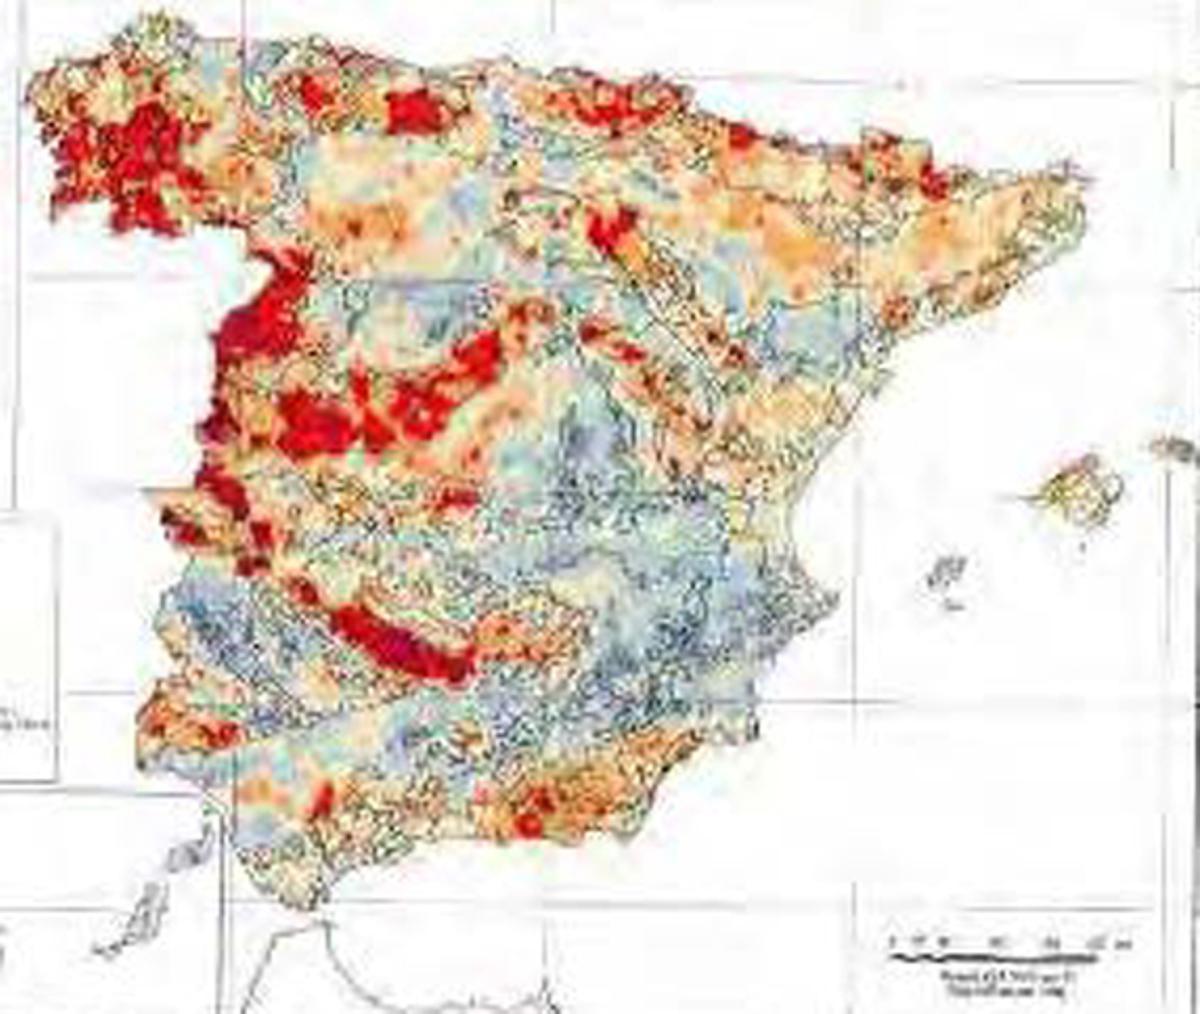 Espacios de concentración de litio en España.